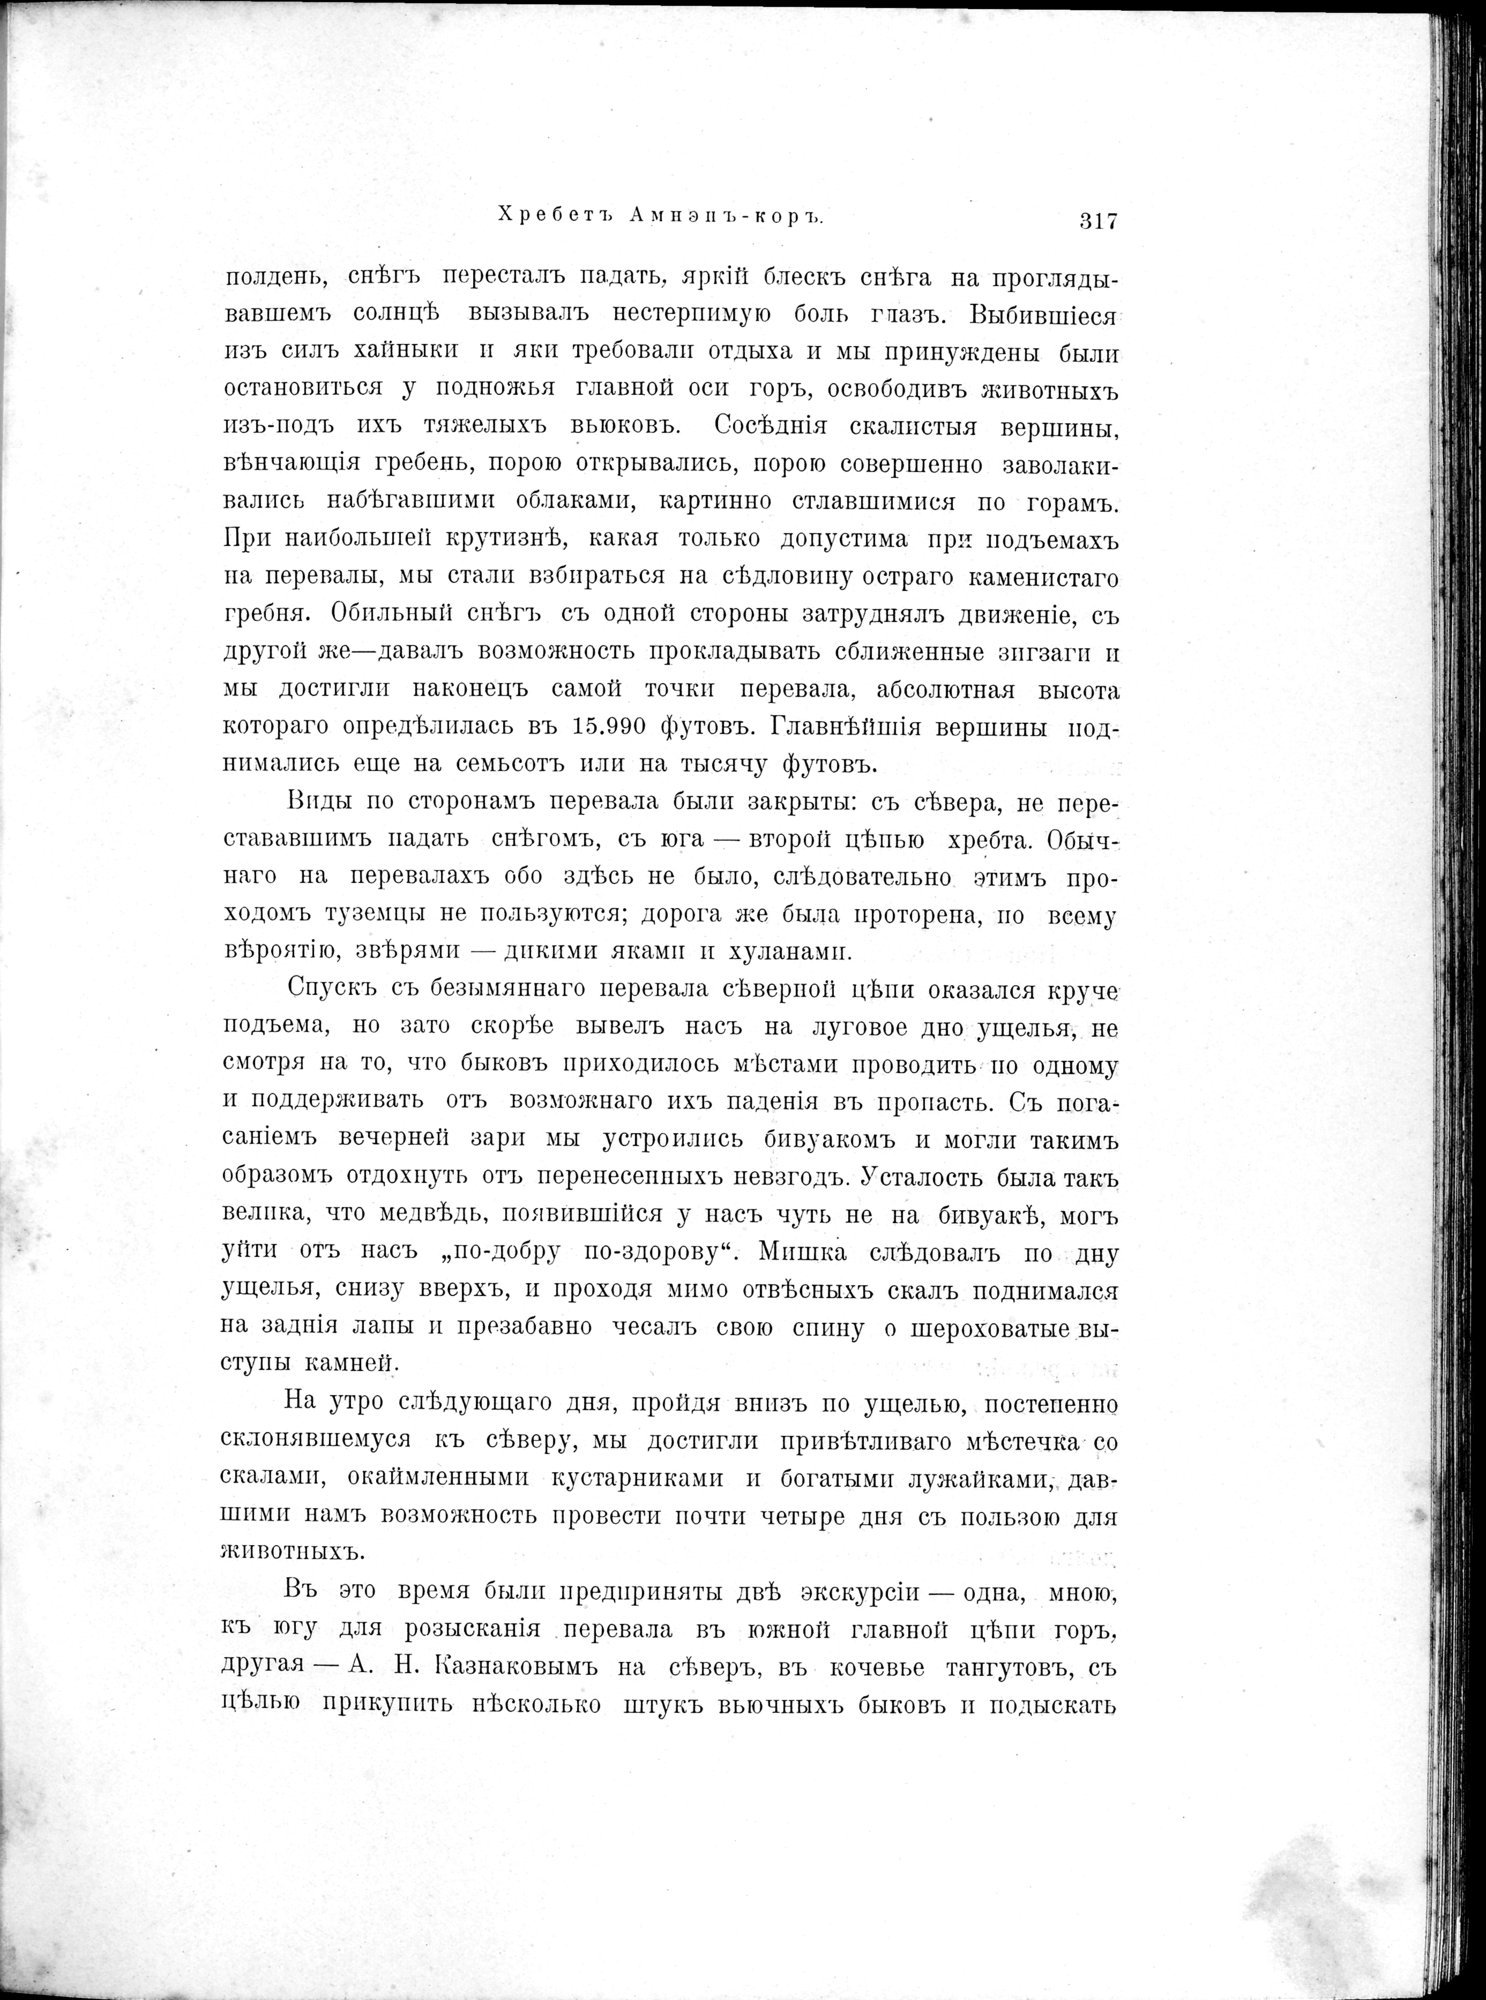 Mongoliia i Kam : vol.2 / Page 87 (Grayscale High Resolution Image)